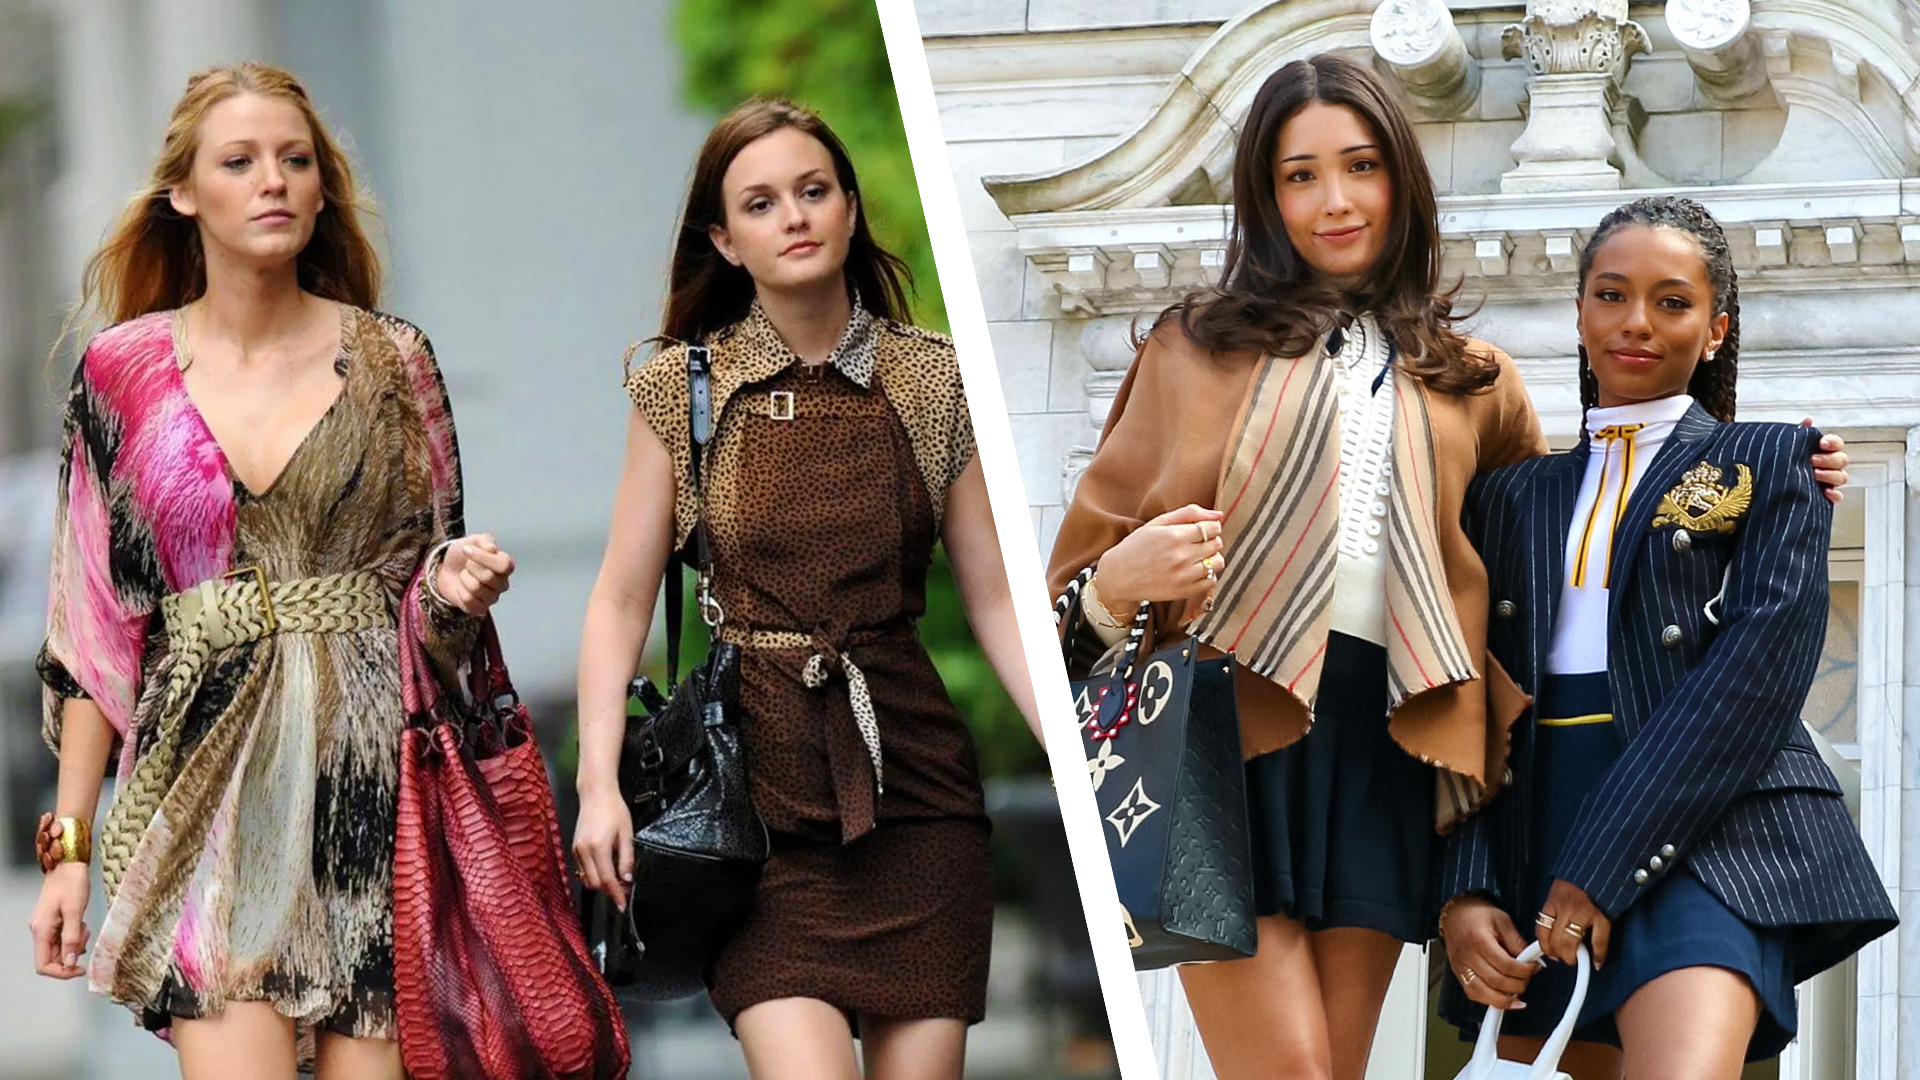 Fall fashion inspired by the original Gossip Girl